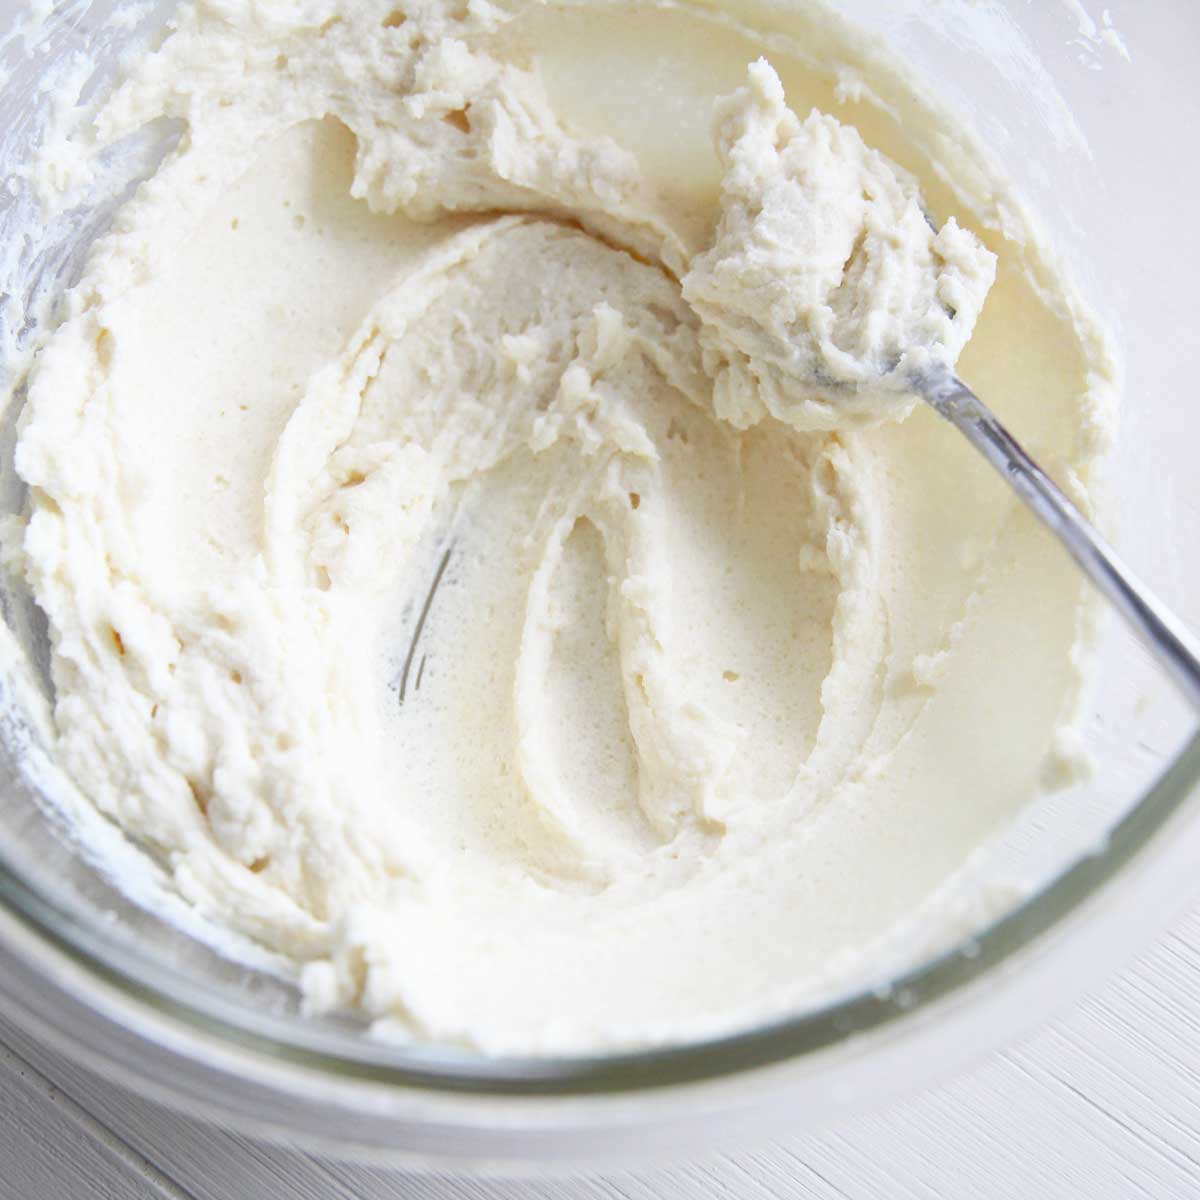 2 Ingredient Almond Yogurt Frosting (Healthy & Low Fat) - Caramel Apple Dip